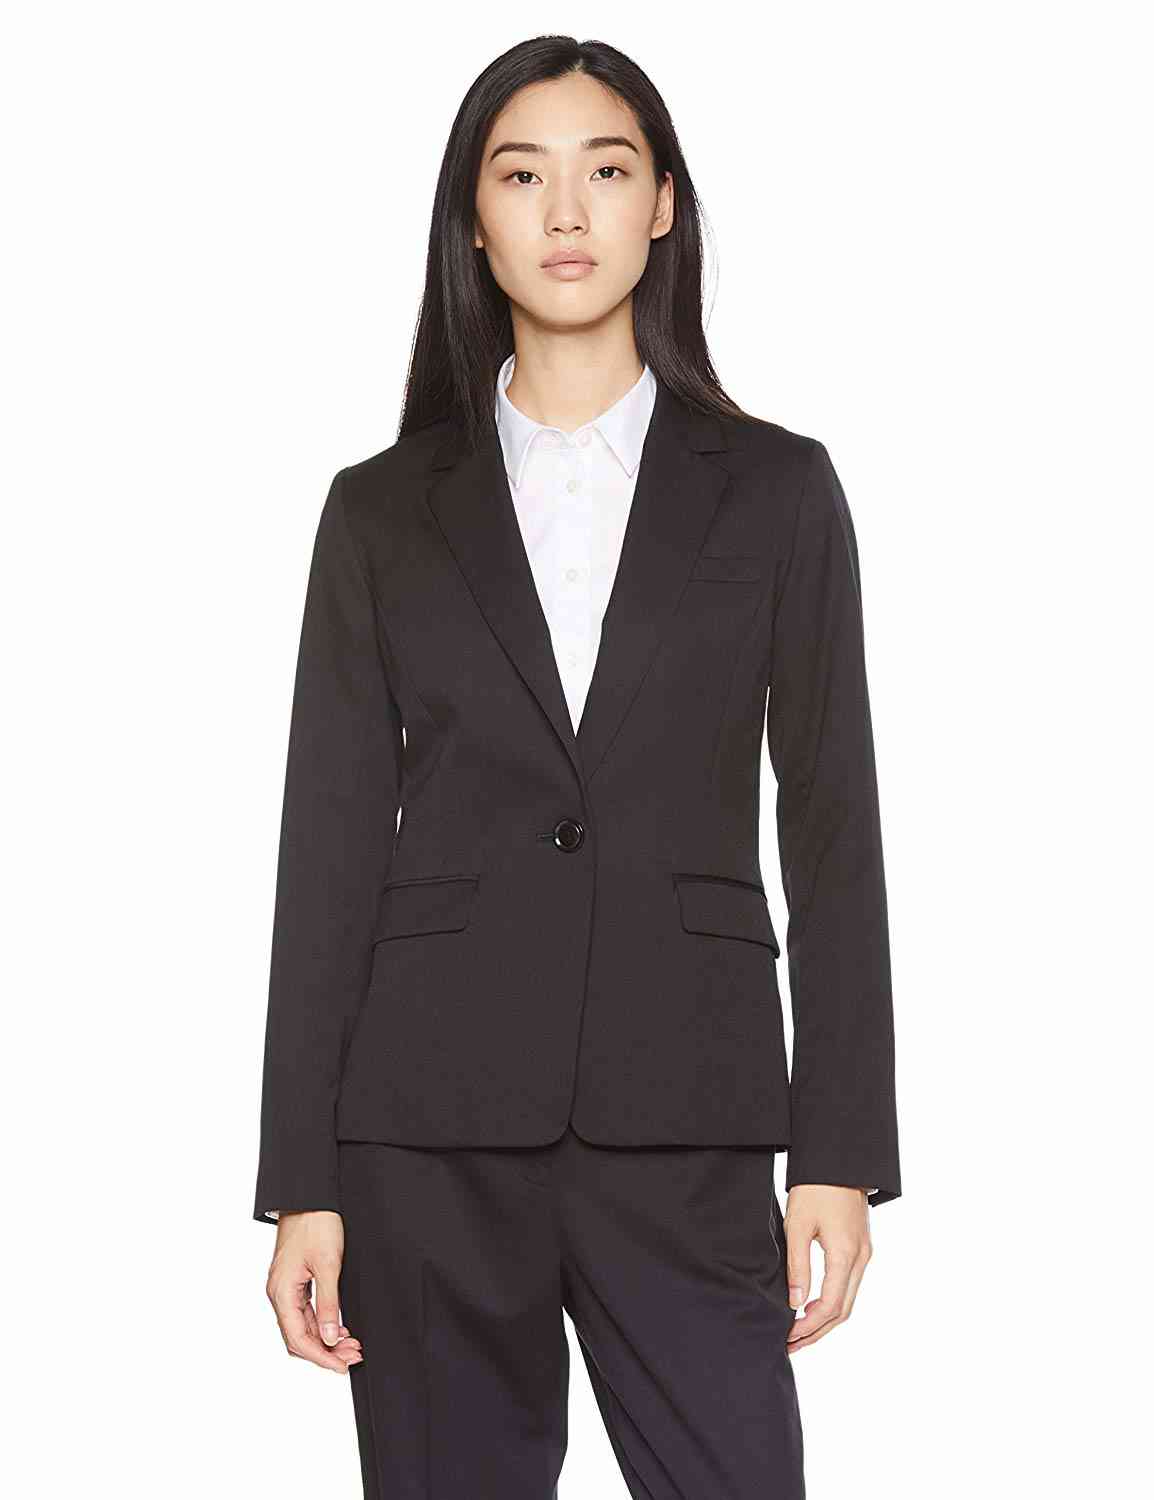 kasword 女性 スーツ 高級ブランド